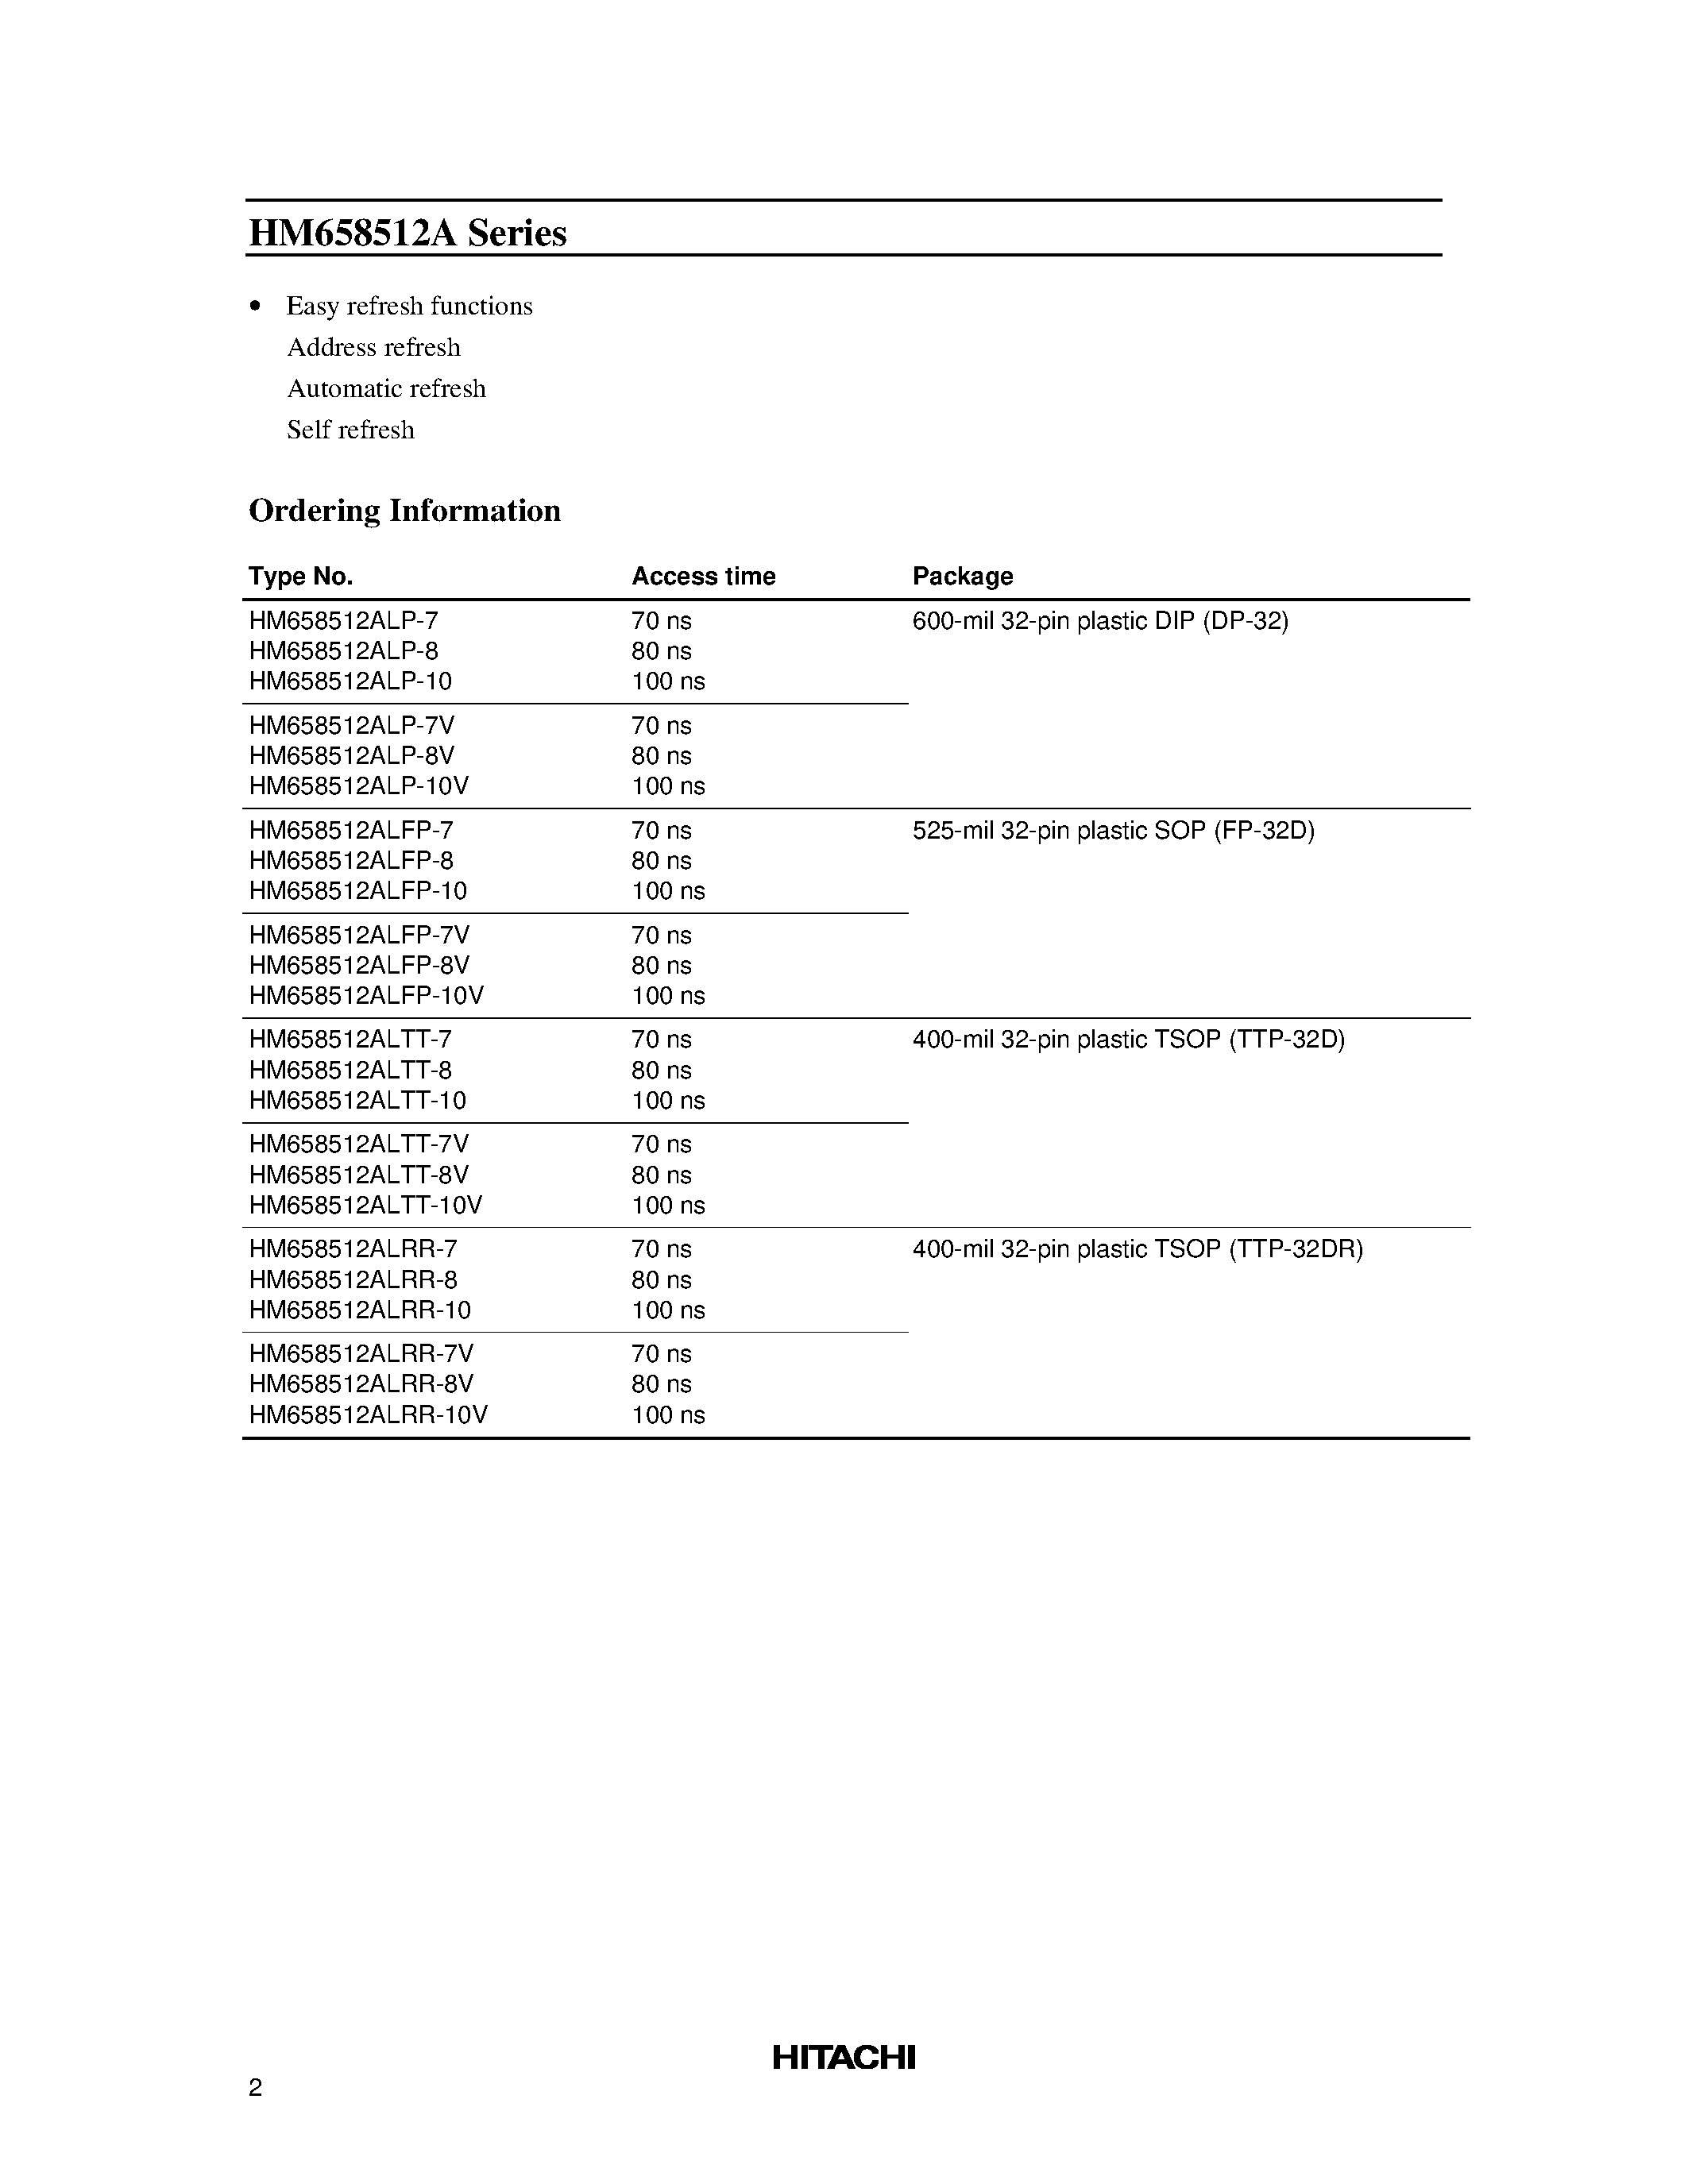 Datasheet HM658512ALRR-8 - 4 M PSRAM (512-kword x 8-bit) 2 k Refresh page 2